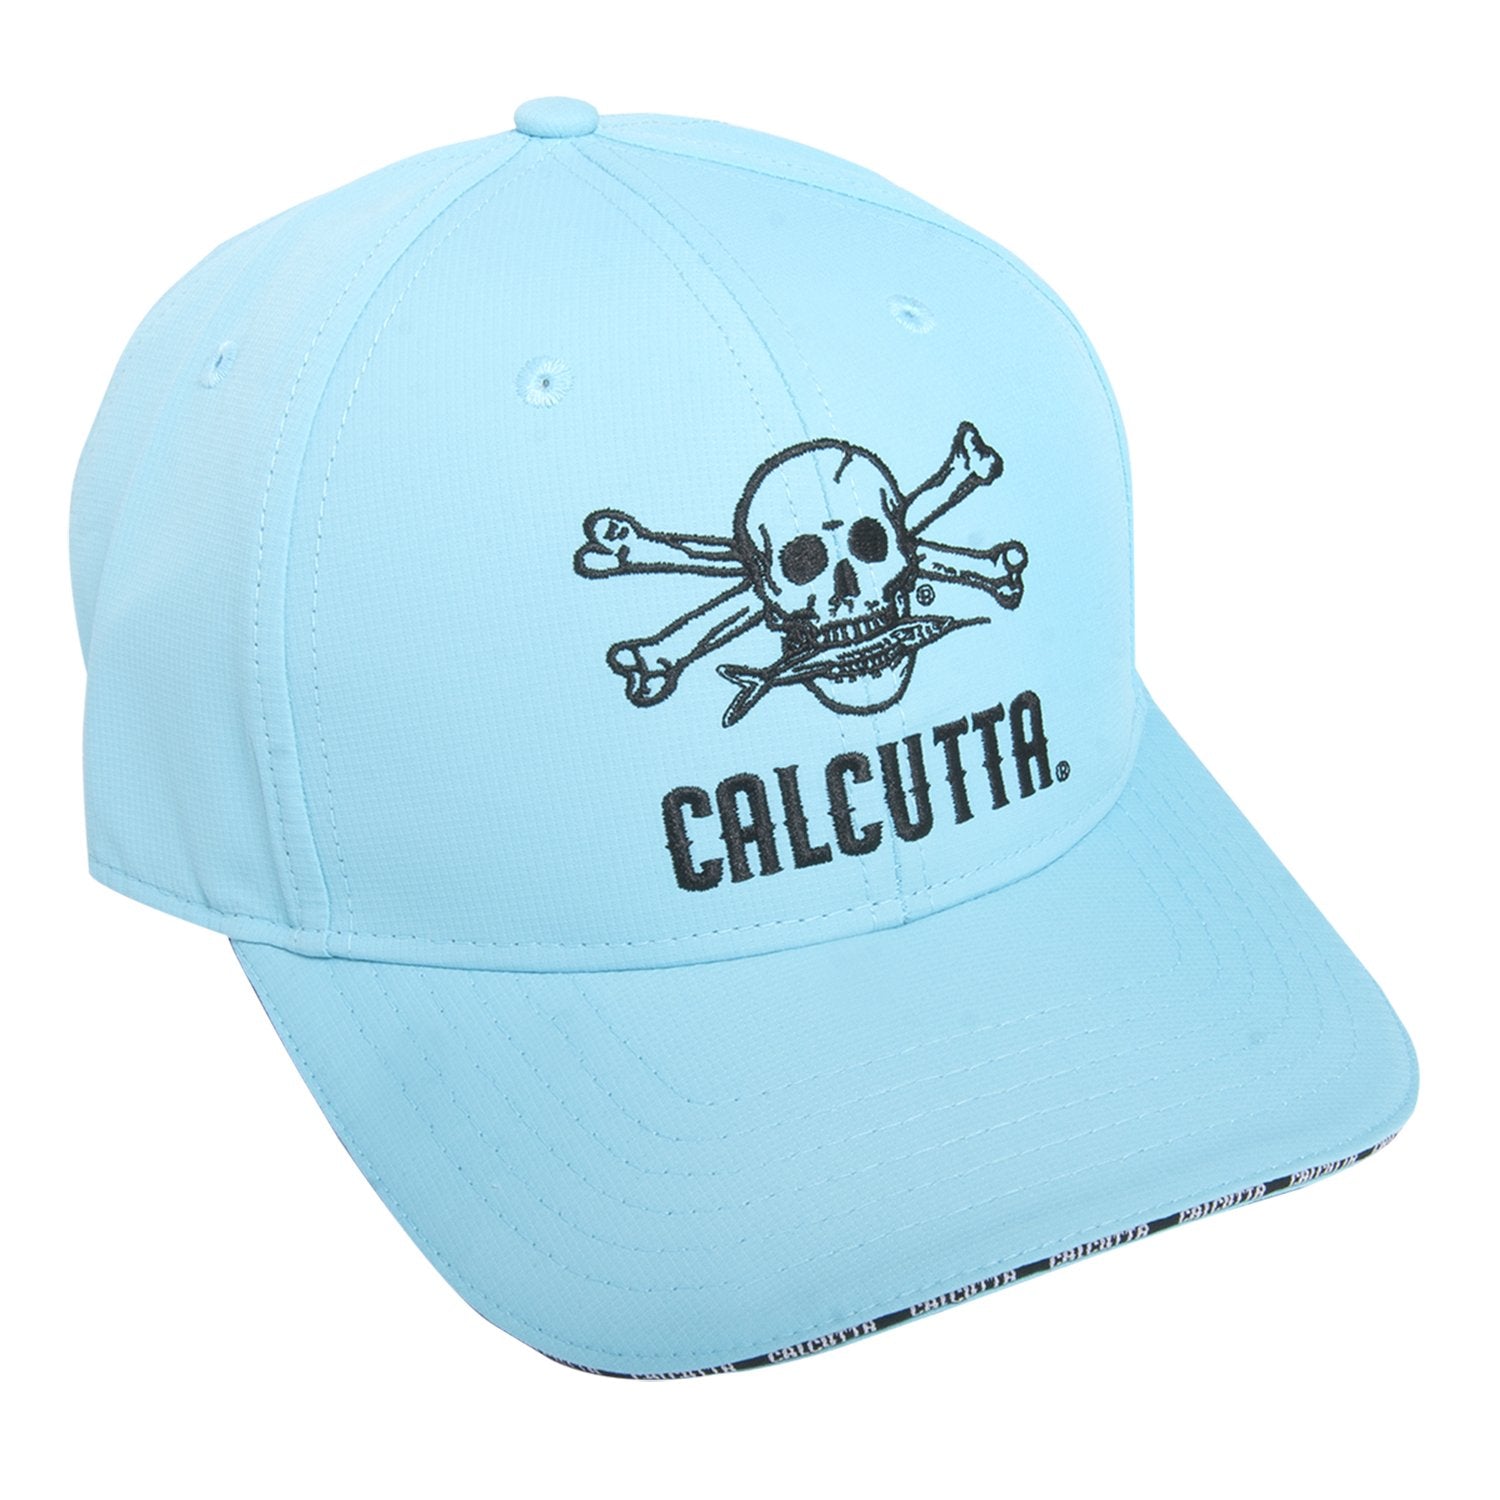 Calcutta fishing golf visor - Gem